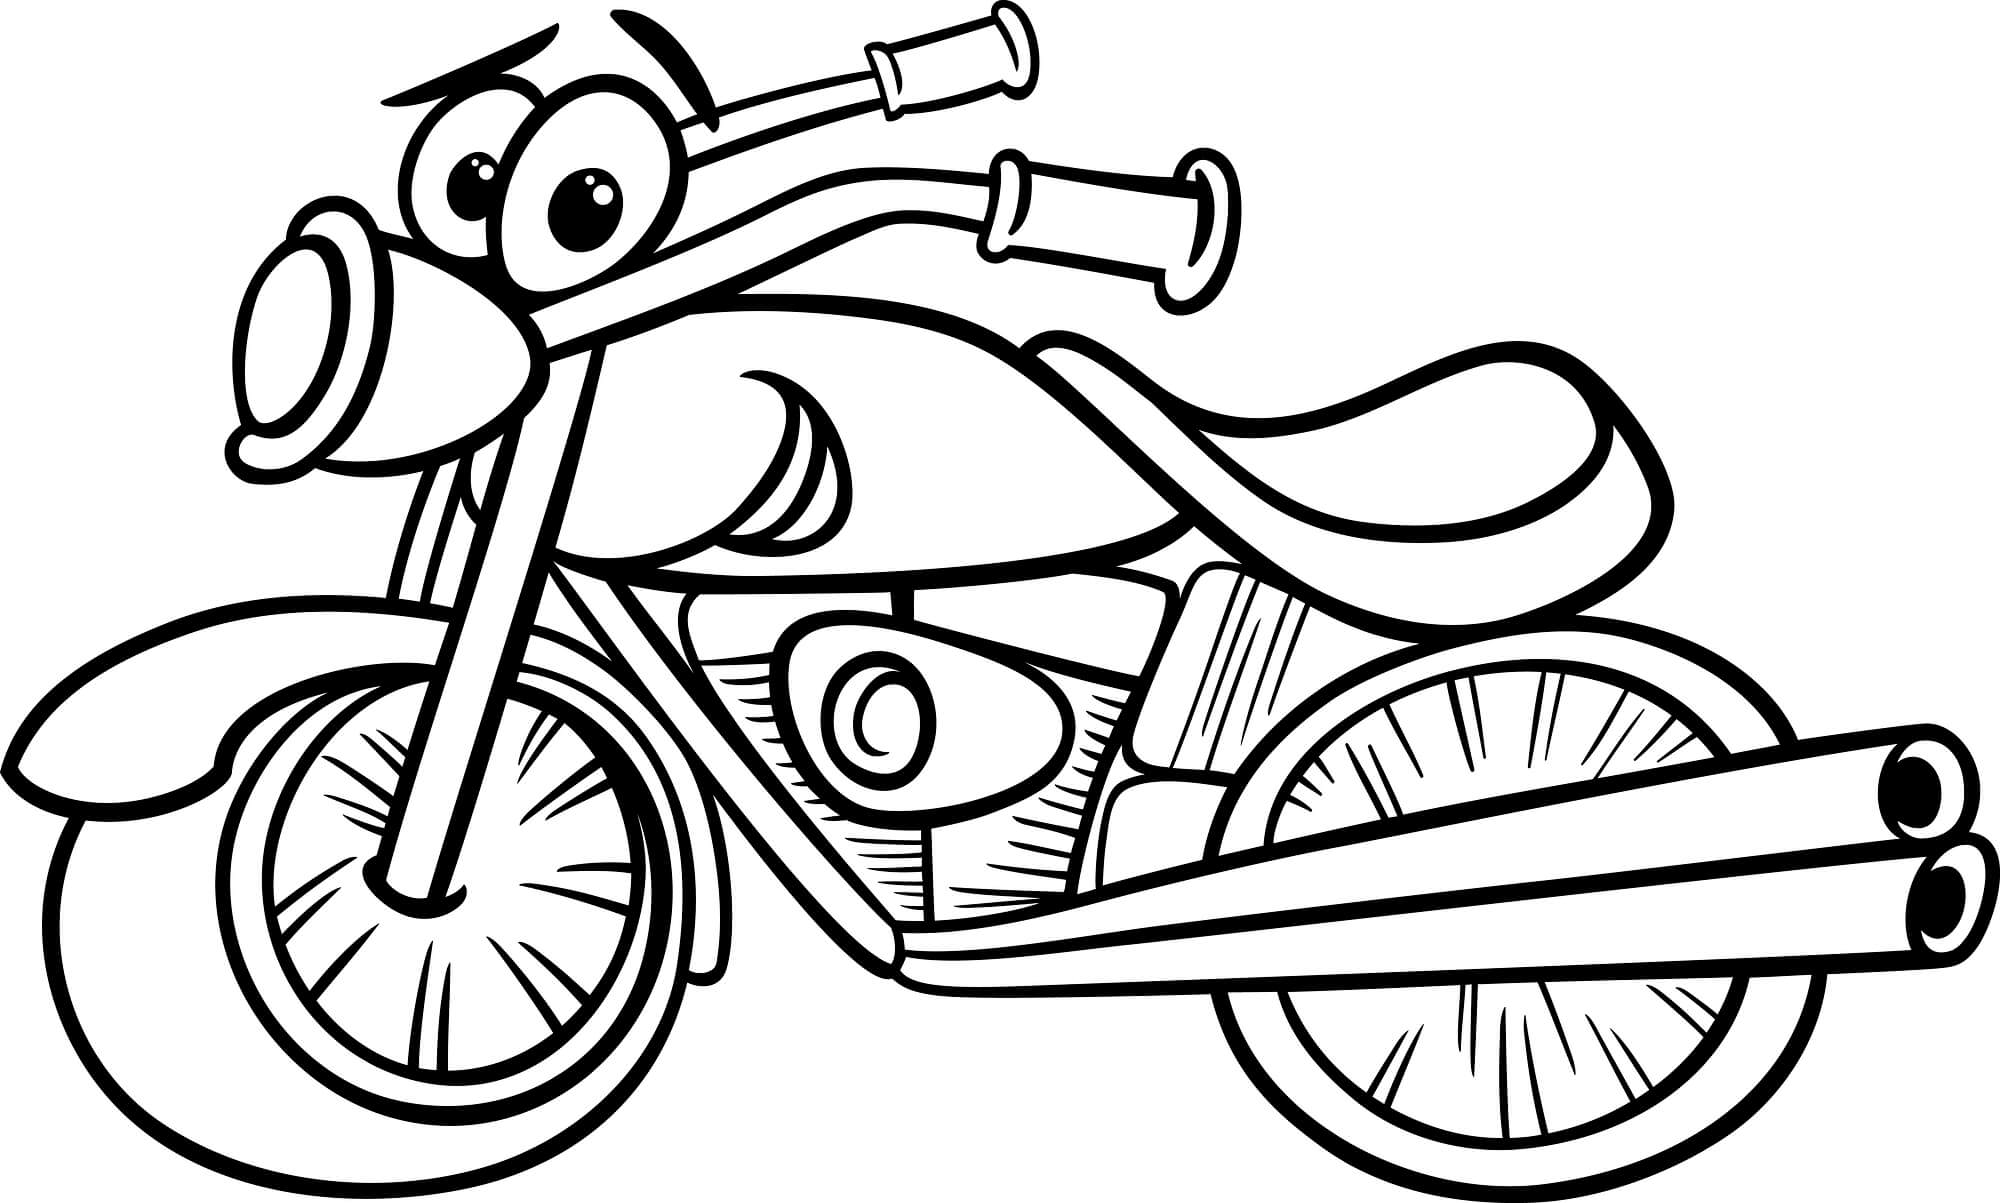 Motocicleta de Dibujos Animados